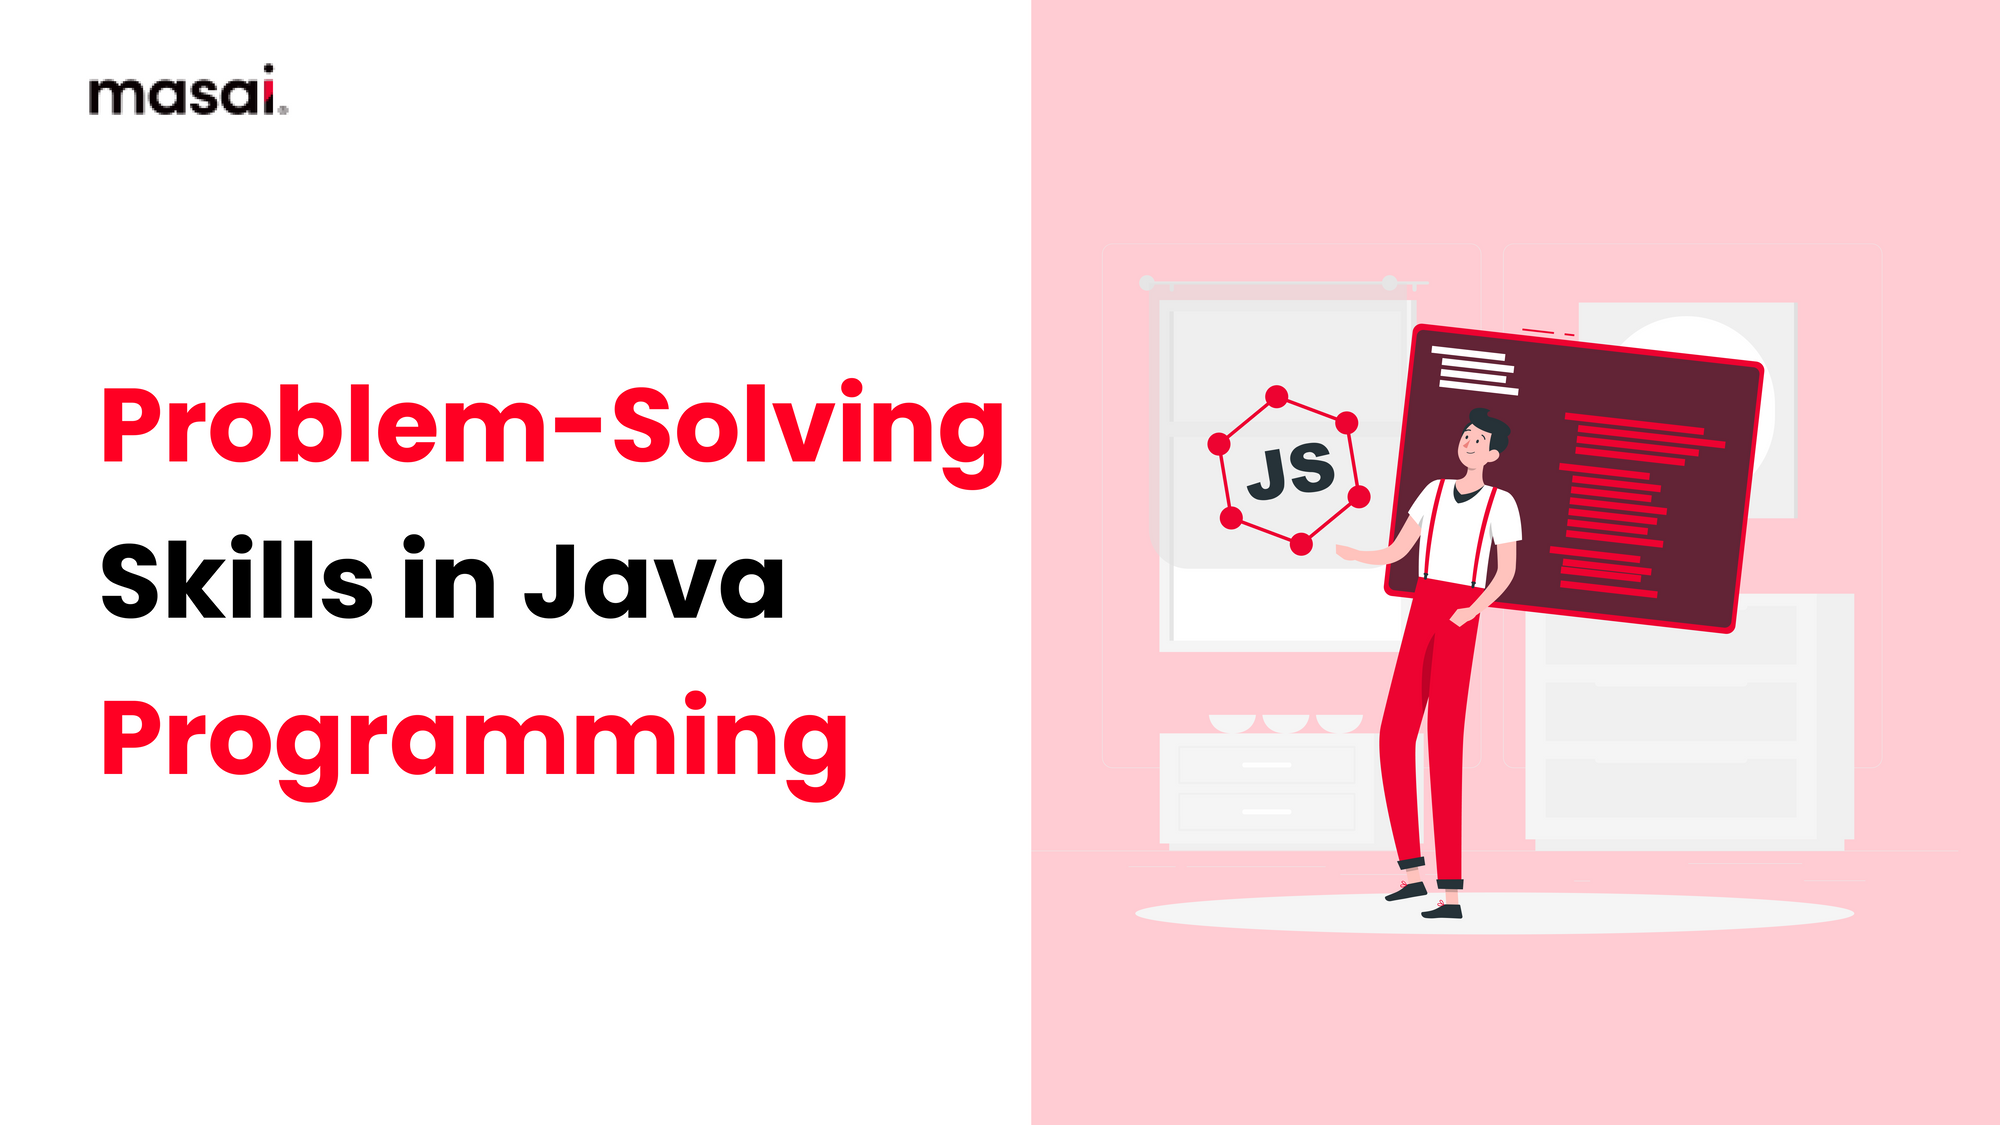 Problem-solving skills in Java programming